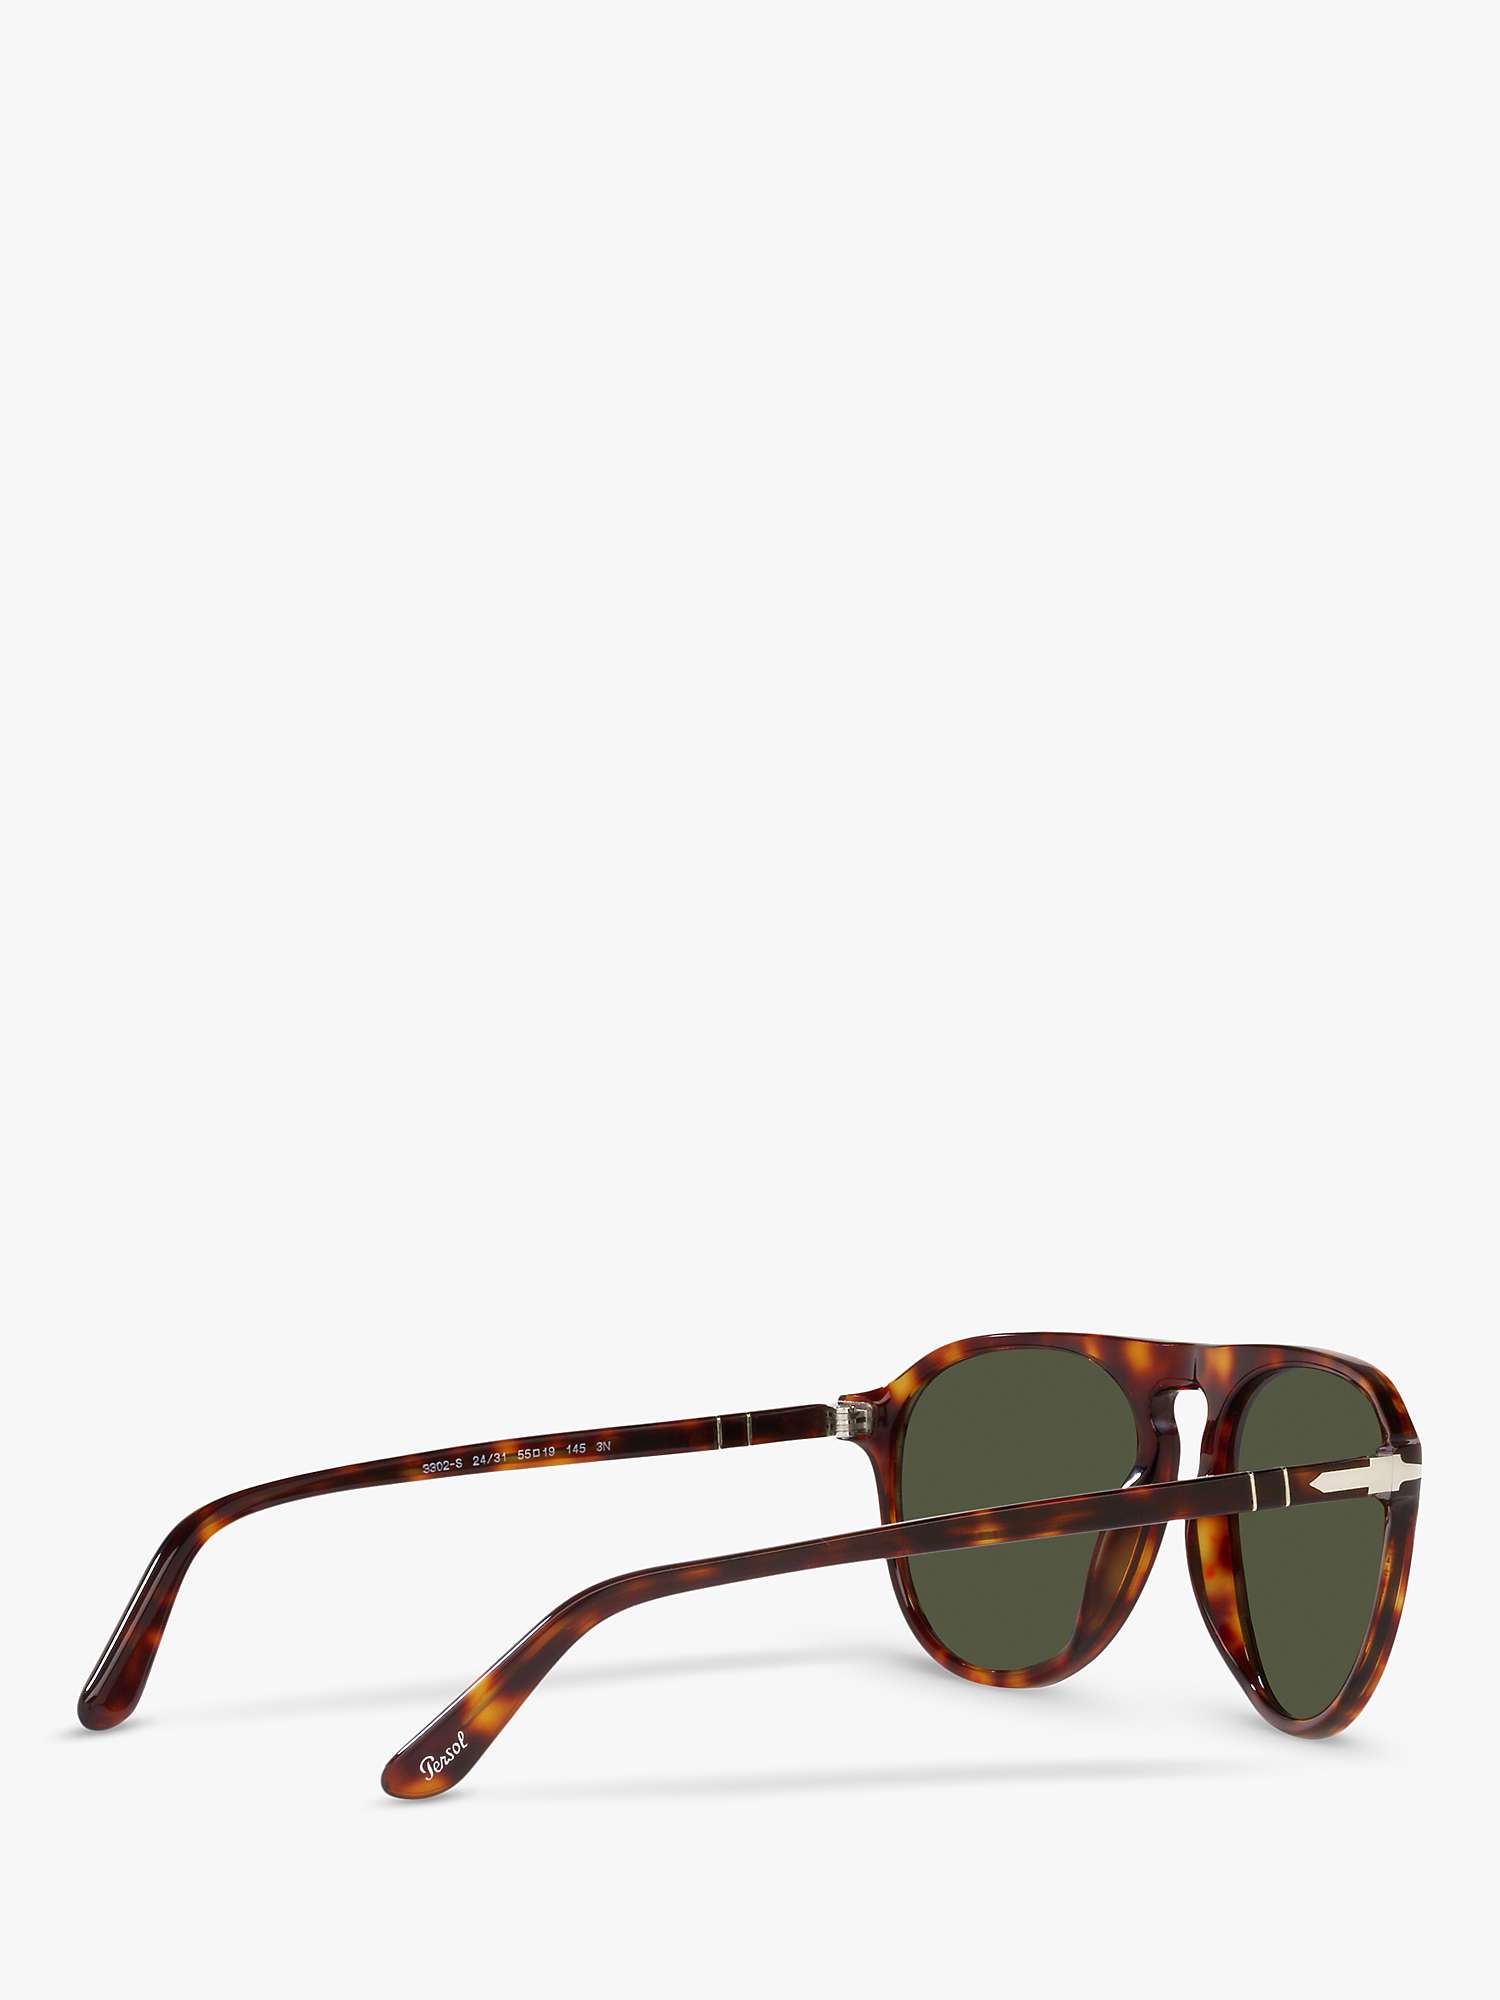 Buy Persol PO3302S Unisex Aviator Sunglasses, Havana/Green Online at johnlewis.com